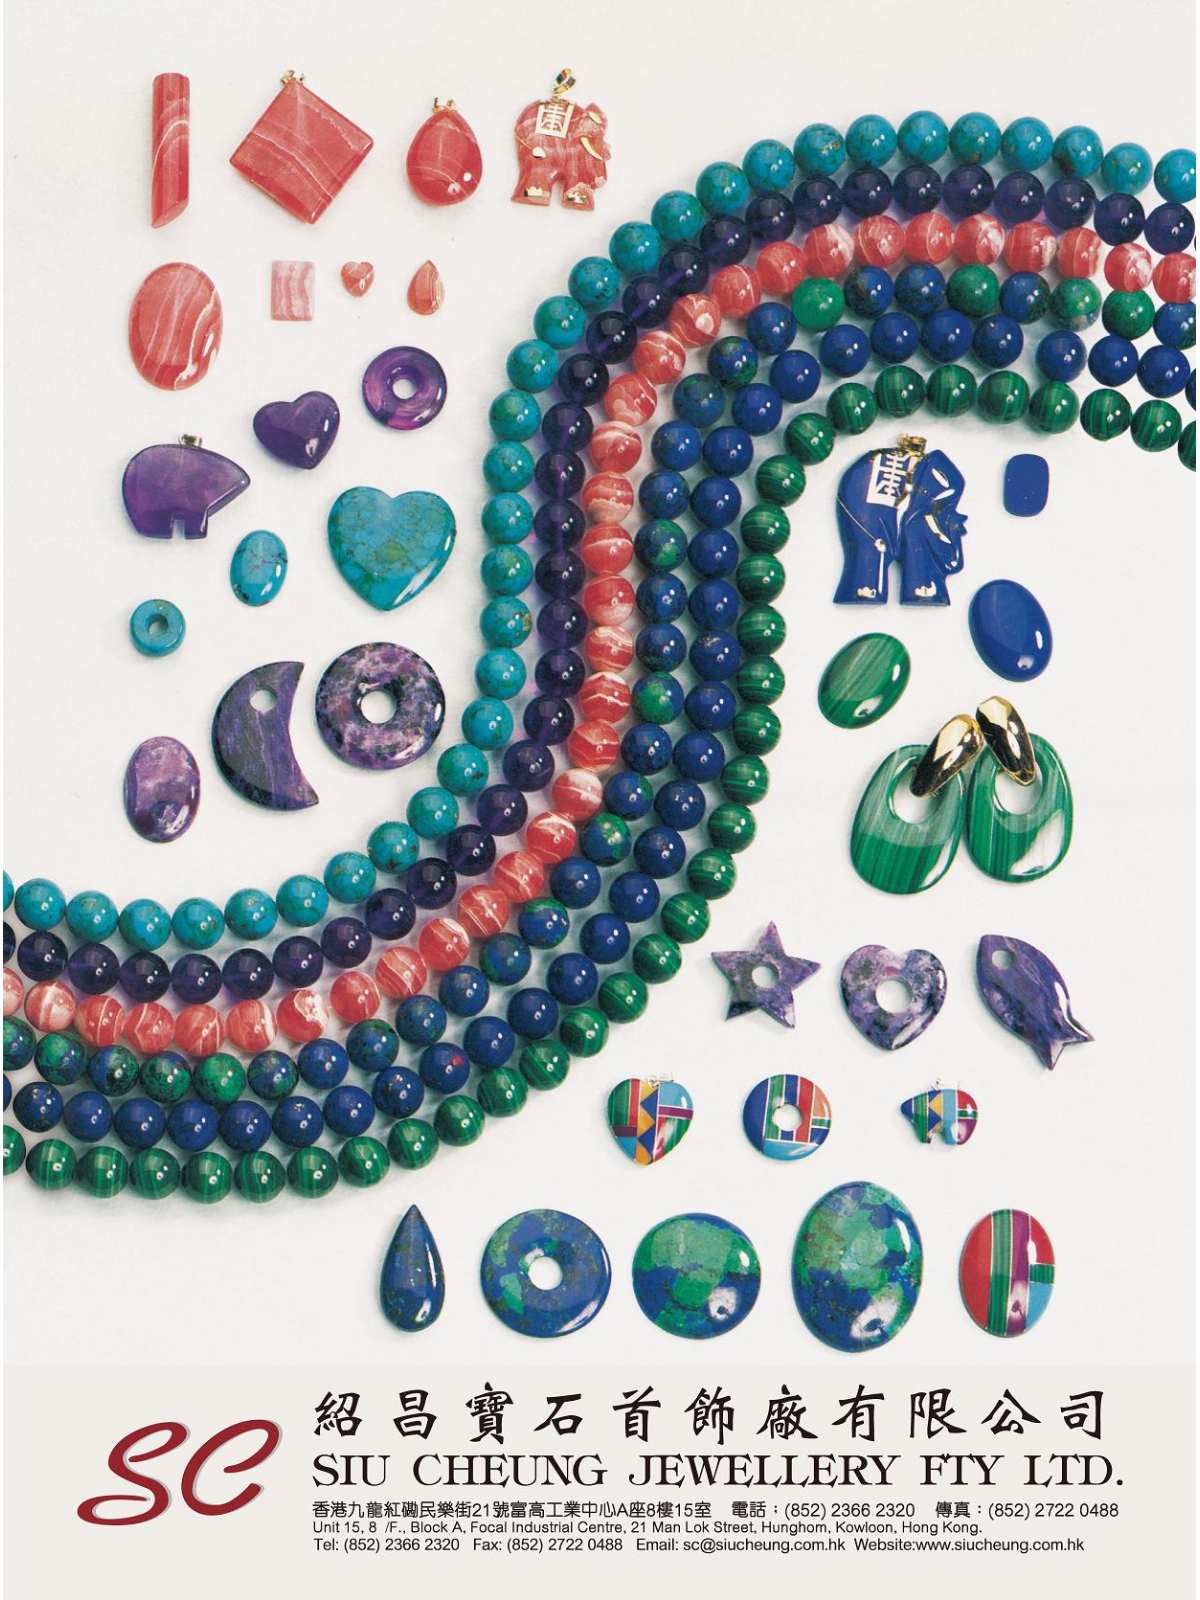 Siu Cheung Jewellery Ltd. Products